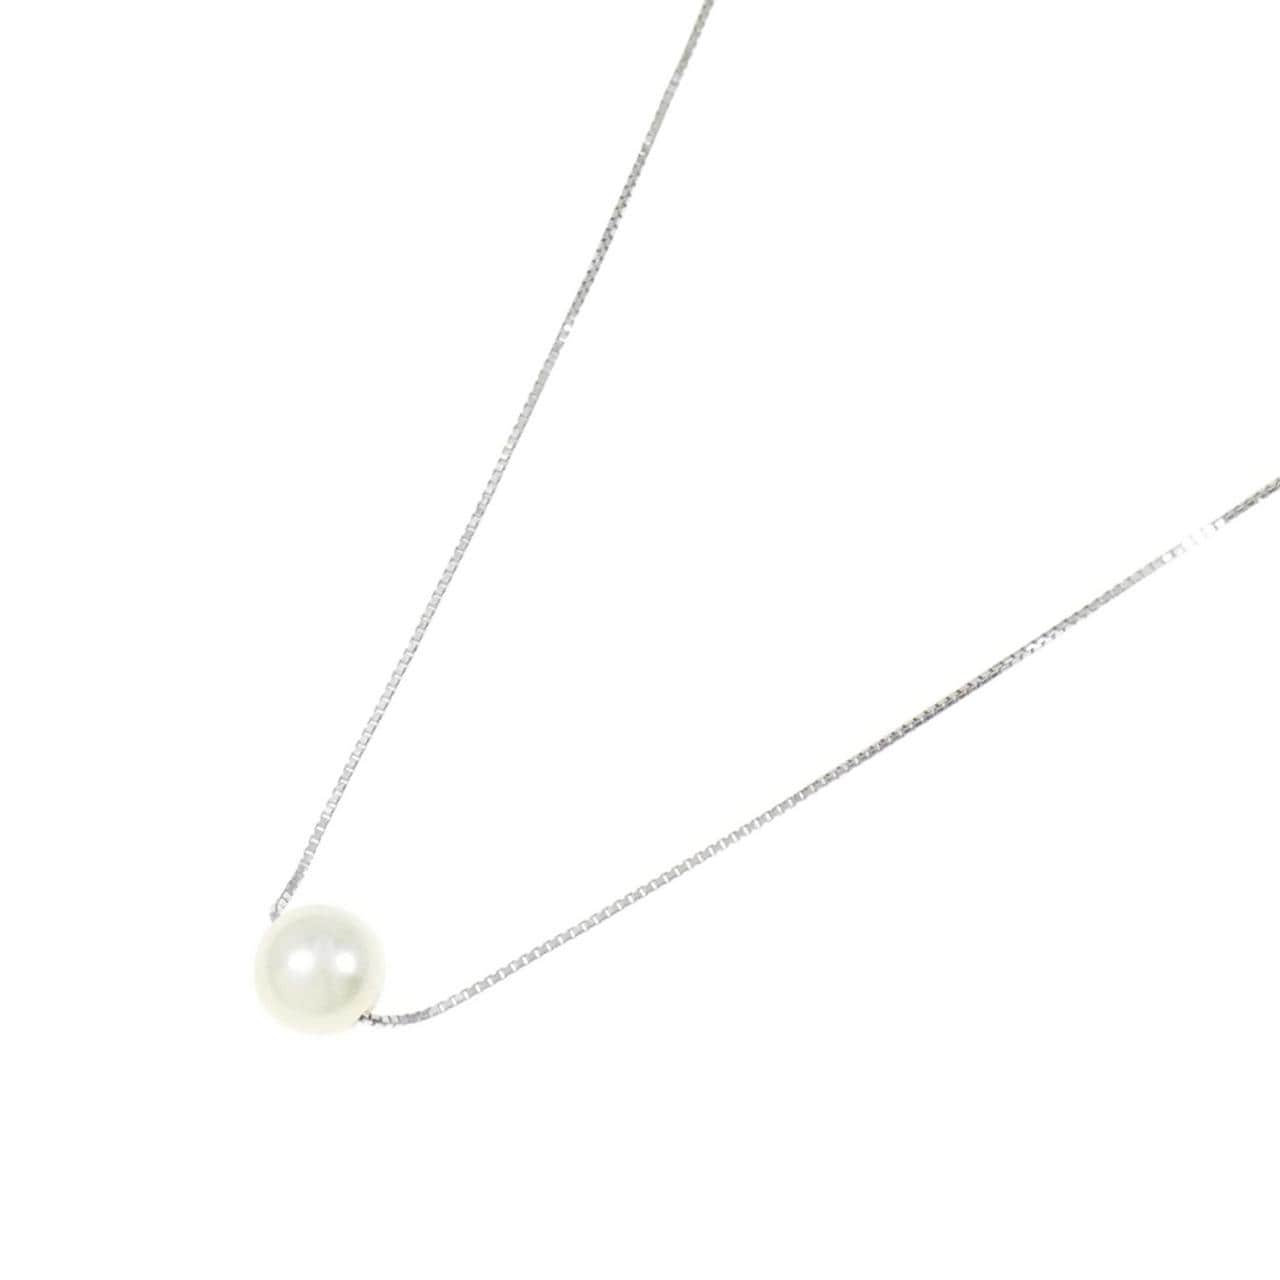 K18WG Akoya pearl necklace 7.5mm